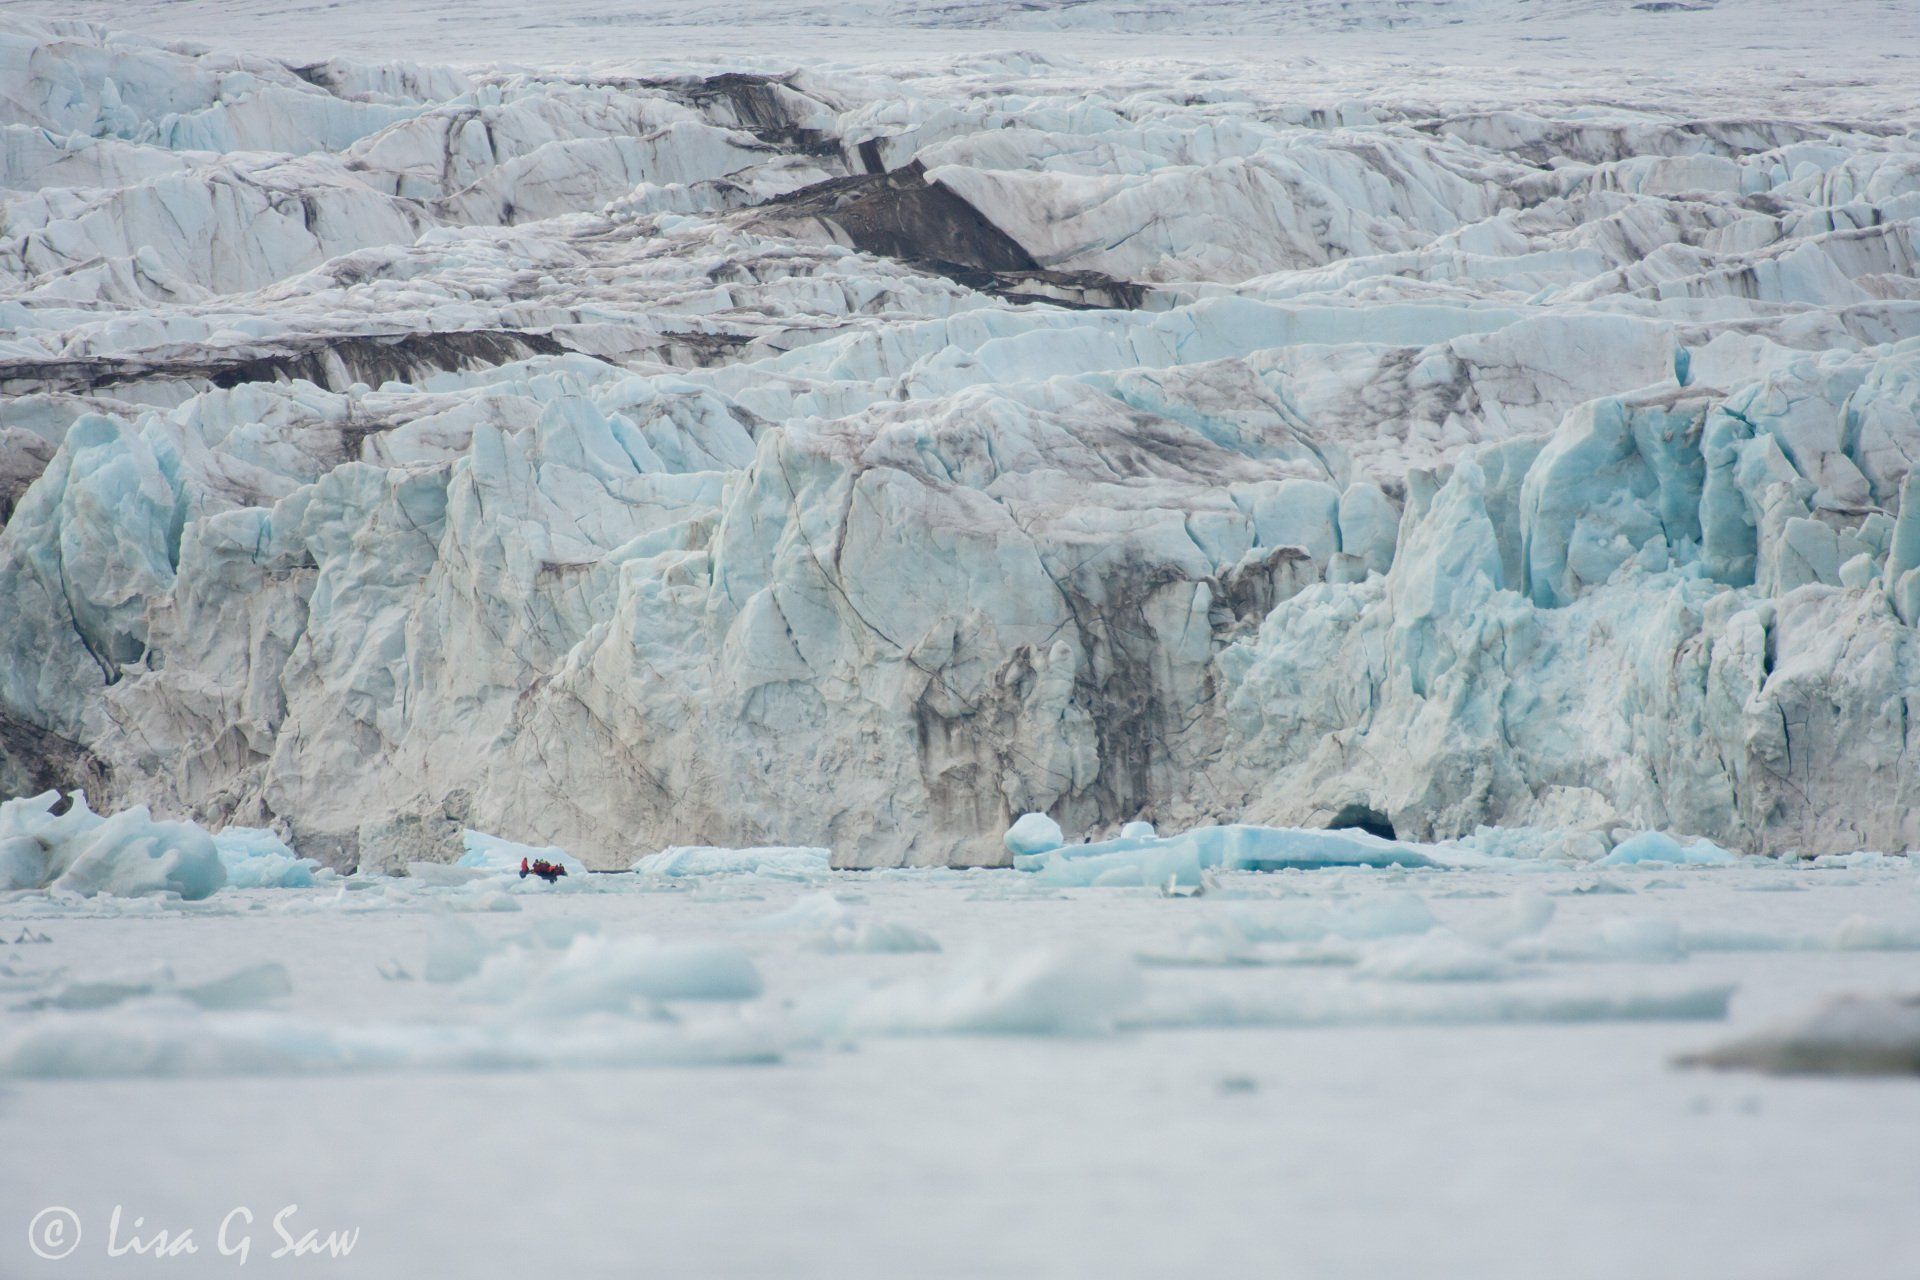 People in zodiac boat dwarfed by Monaco Glacier, Svalbard